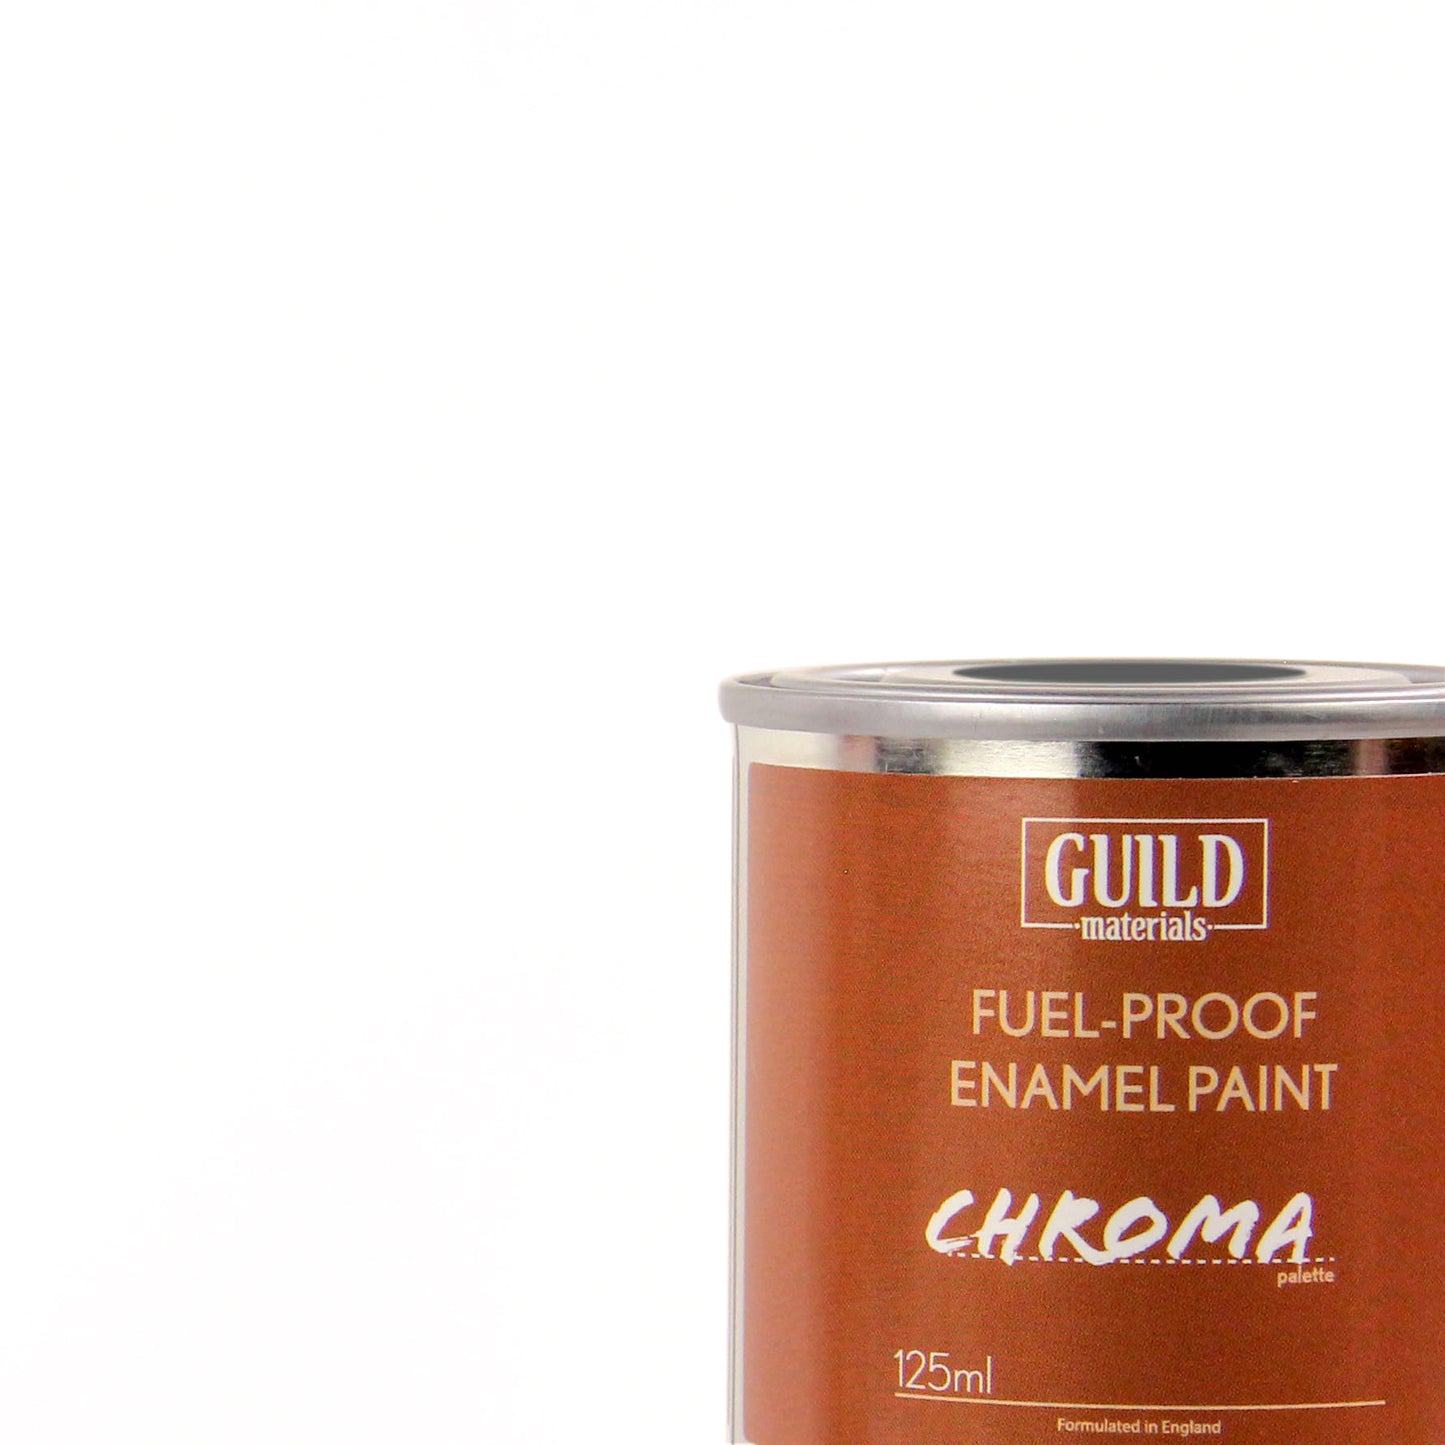 Chroma Enamel Fuelproof Paint Matt White (125ml Tin)